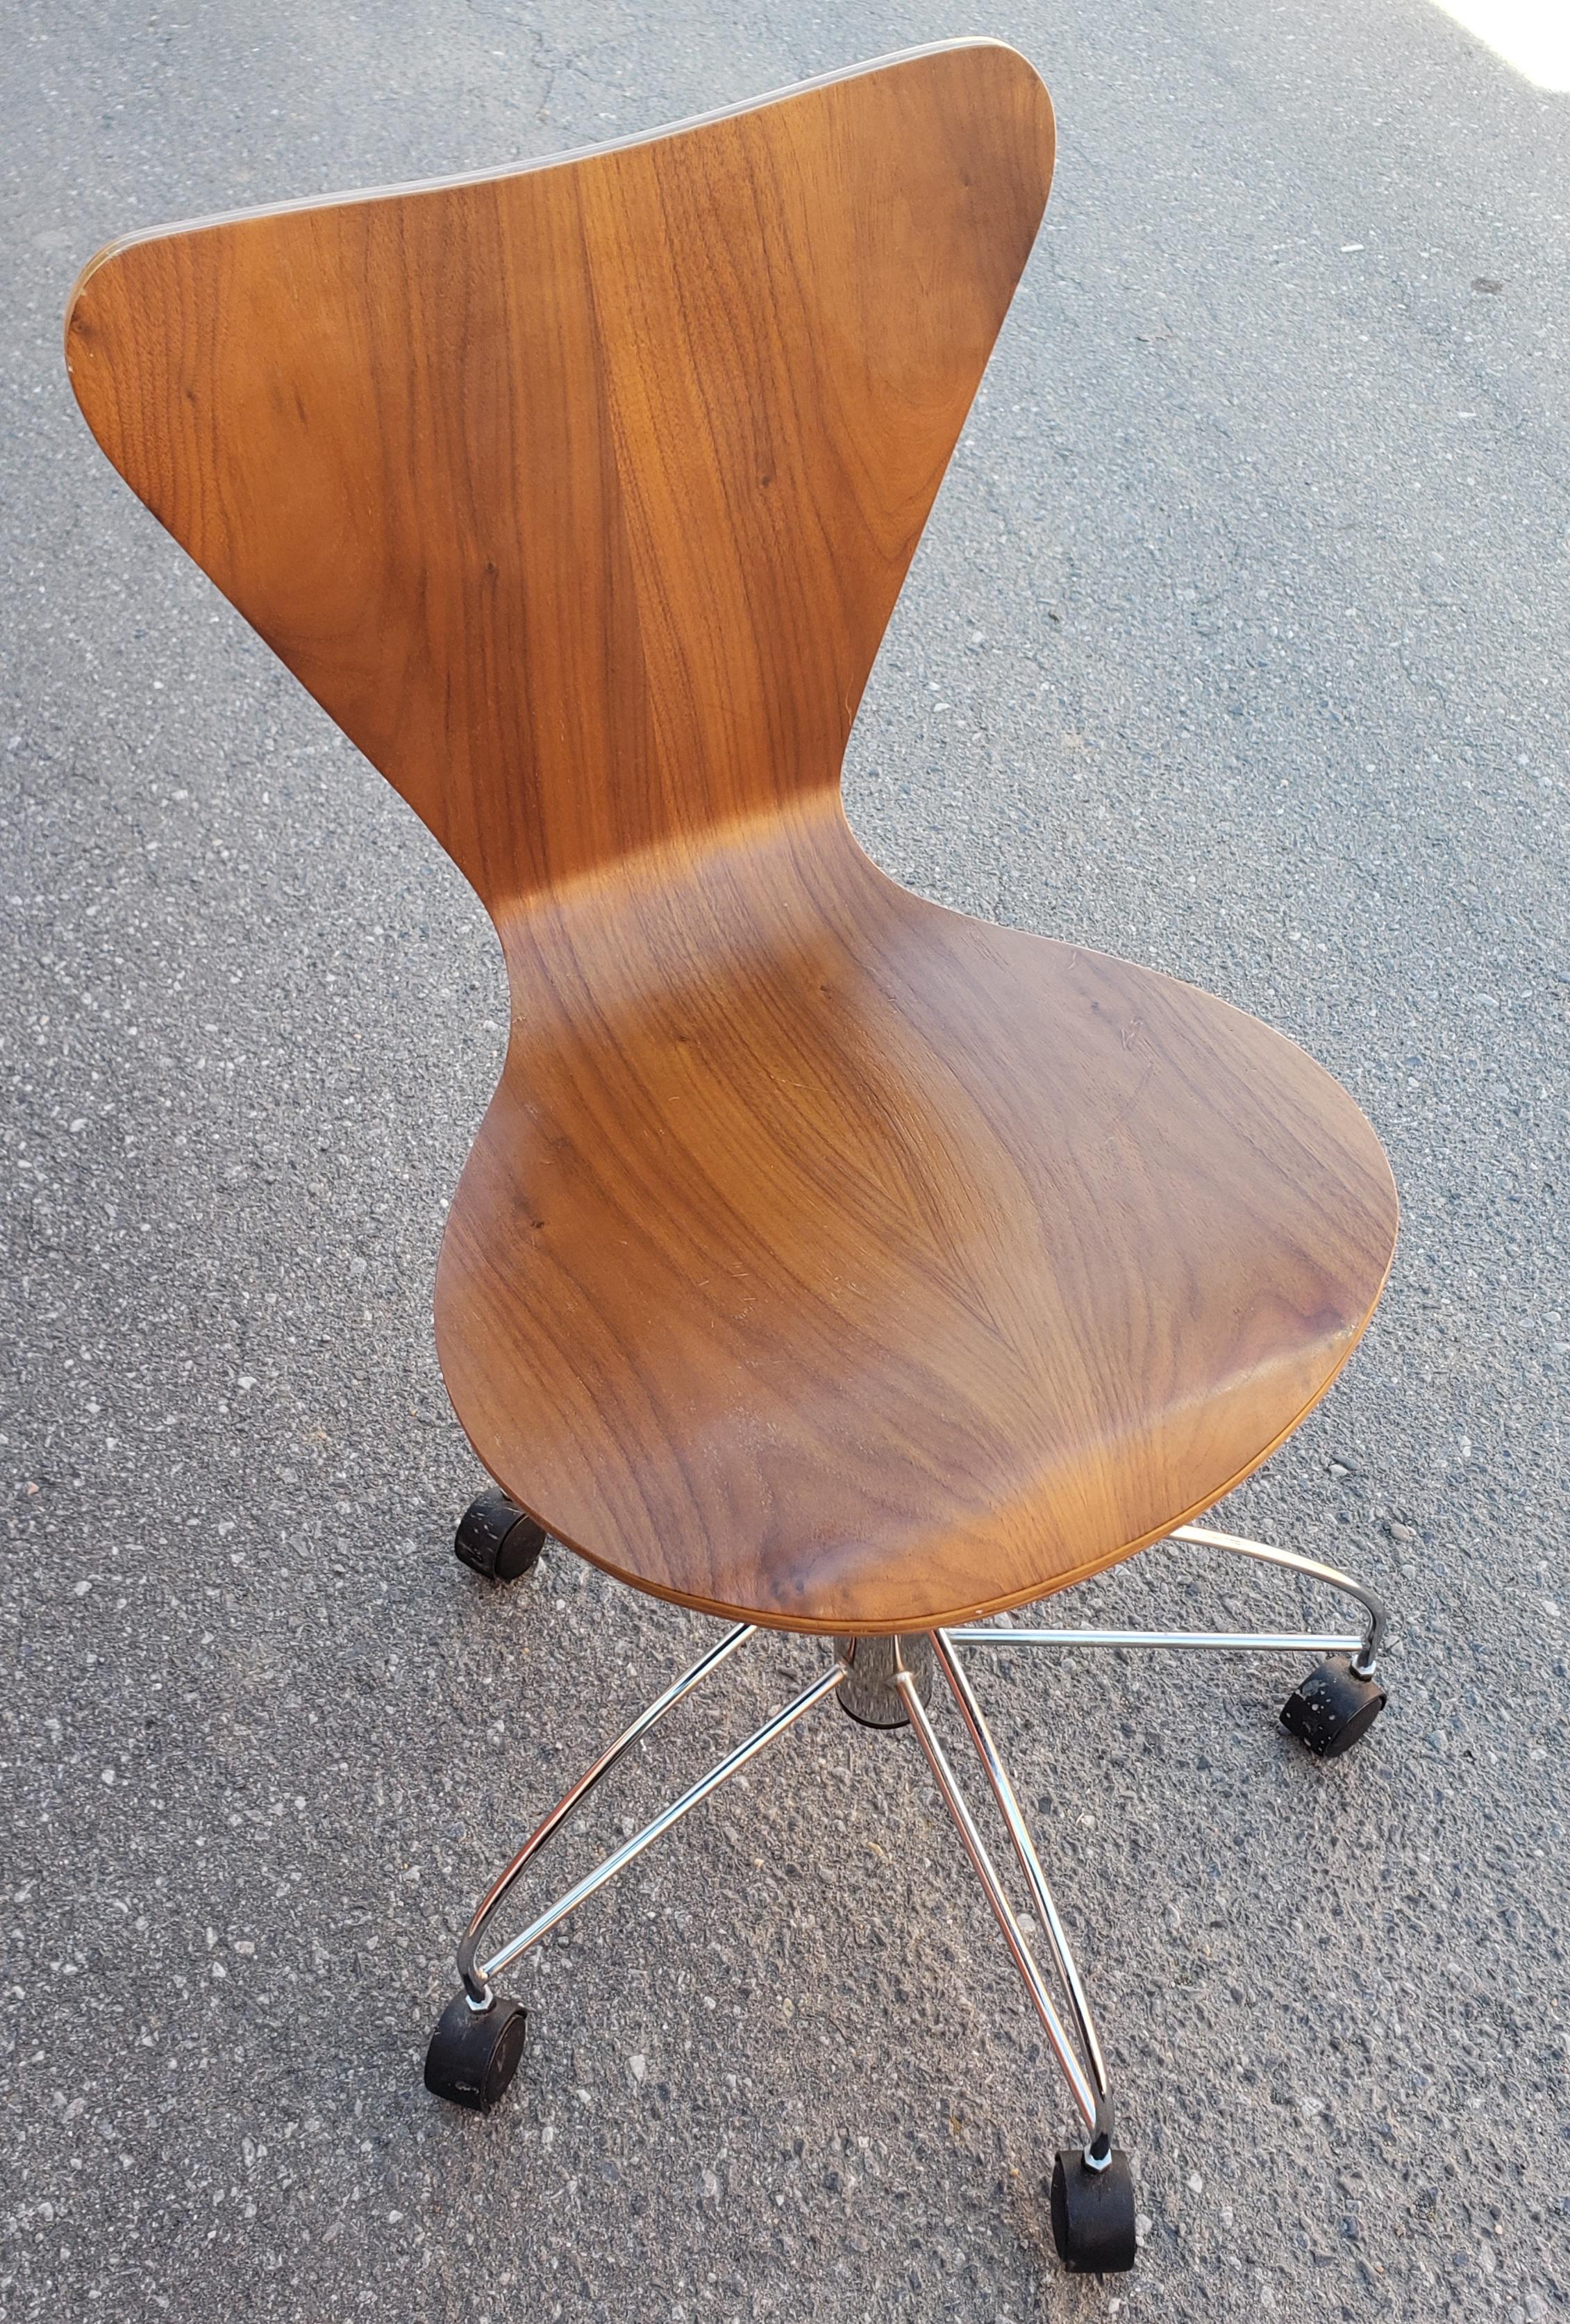 Arne Jacobsen Danish Teak Adjustable Height Swivel Desk Chair In Good Condition For Sale In Germantown, MD